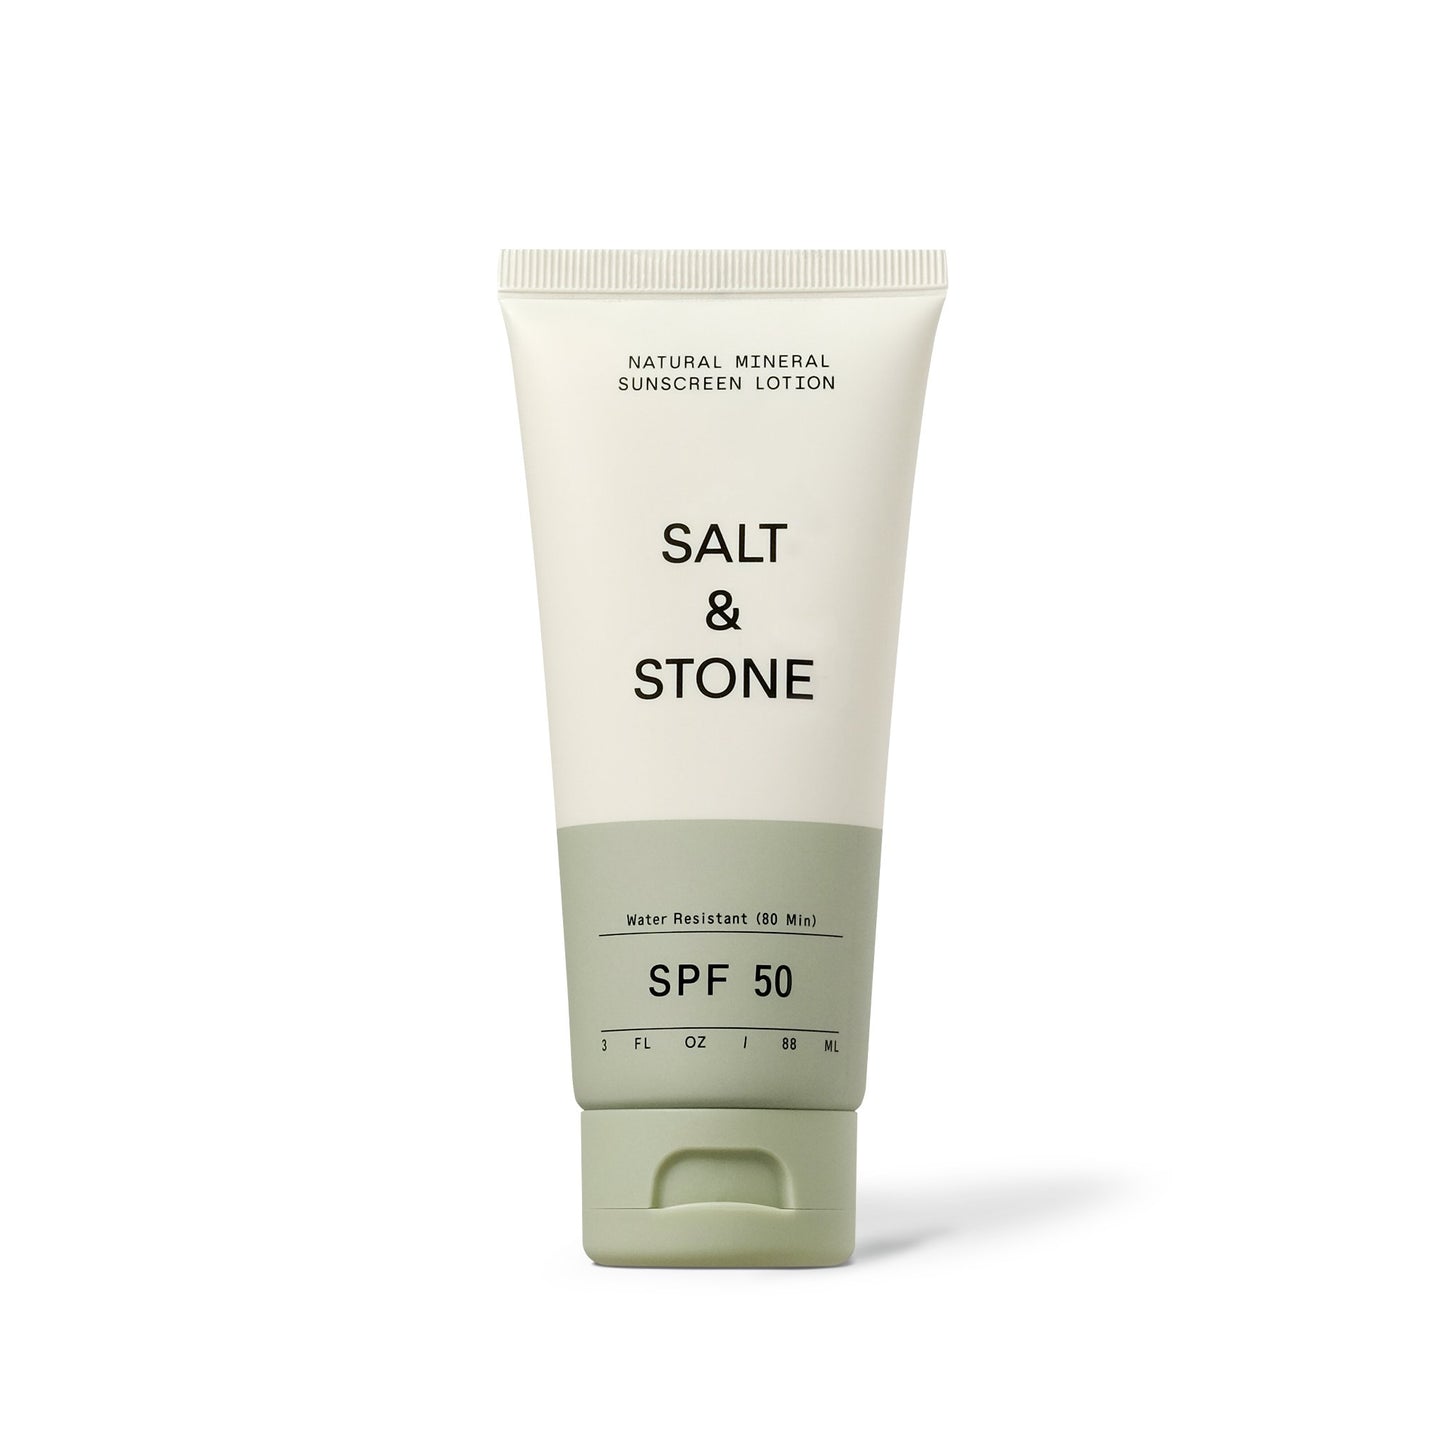 Salt & Stone - Salt & Stone Natural Mineral Sunscreen Lotion SPF 50 - ORESTA clean beauty simplified